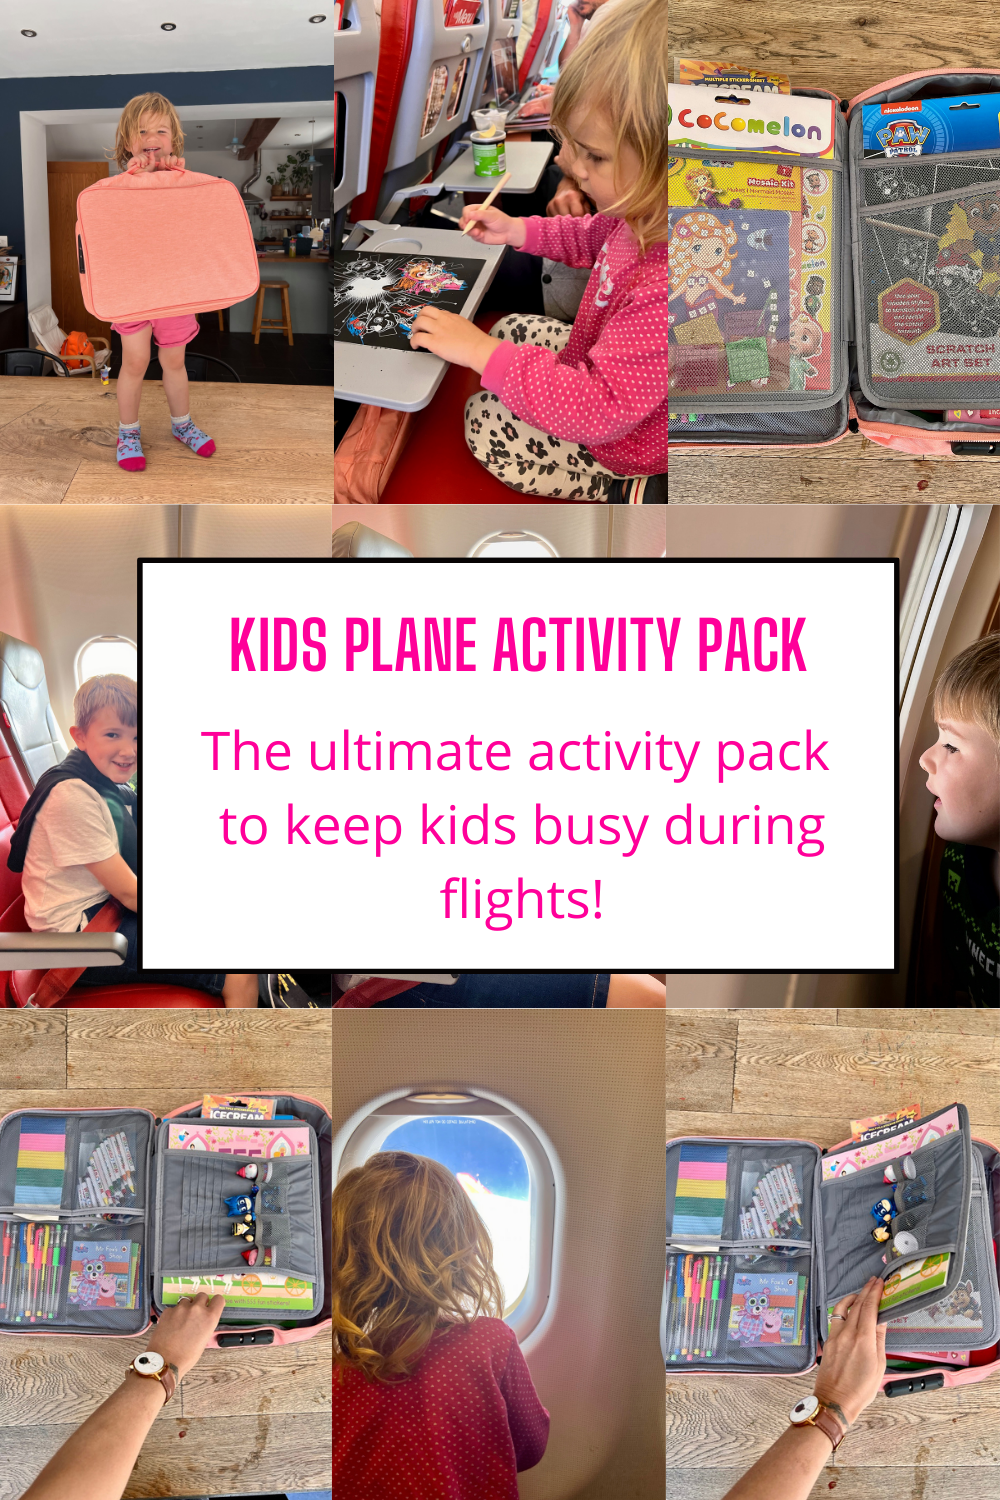 https://thetravelhack.com/wp-content/uploads/2022/07/kids-activity-pack-on-plane.png